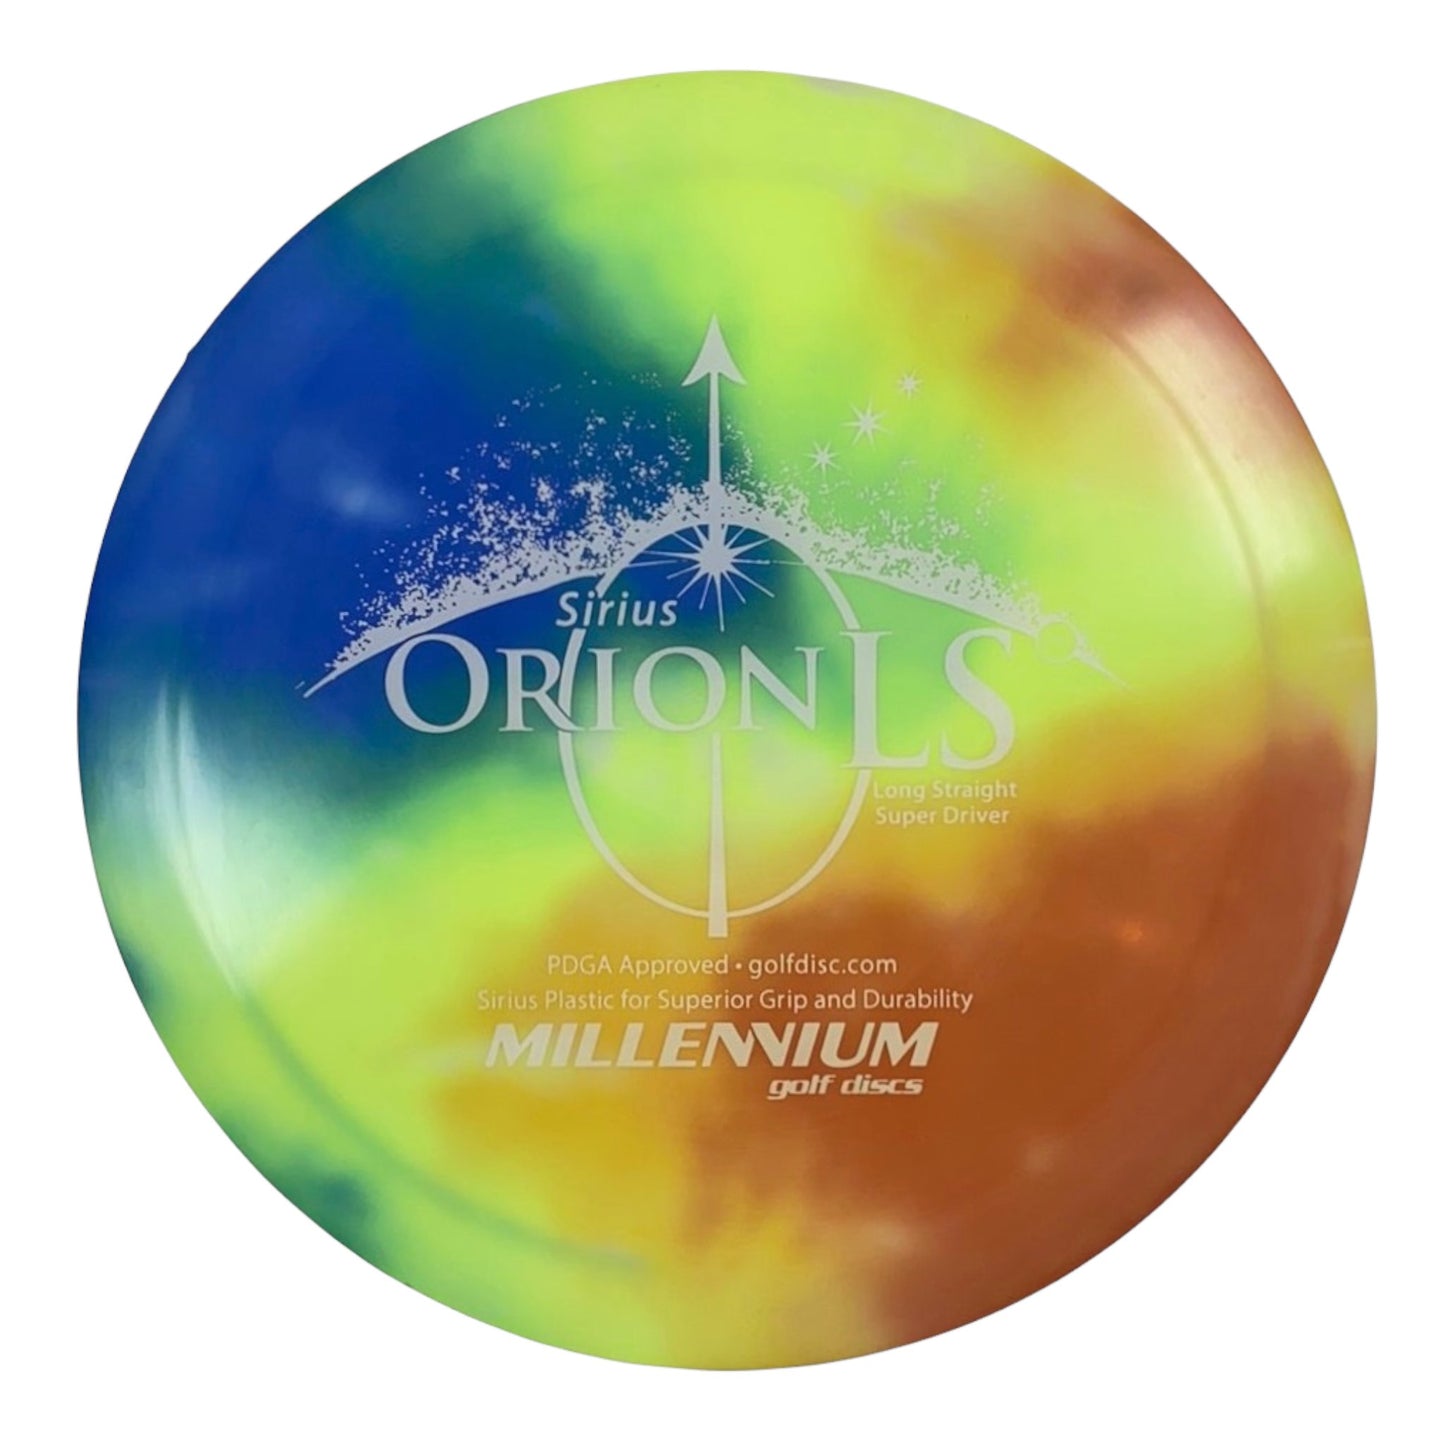 Millennium Golf Discs Orion LS | Sirius Dyed | Multi/White 170-175g Disc Golf